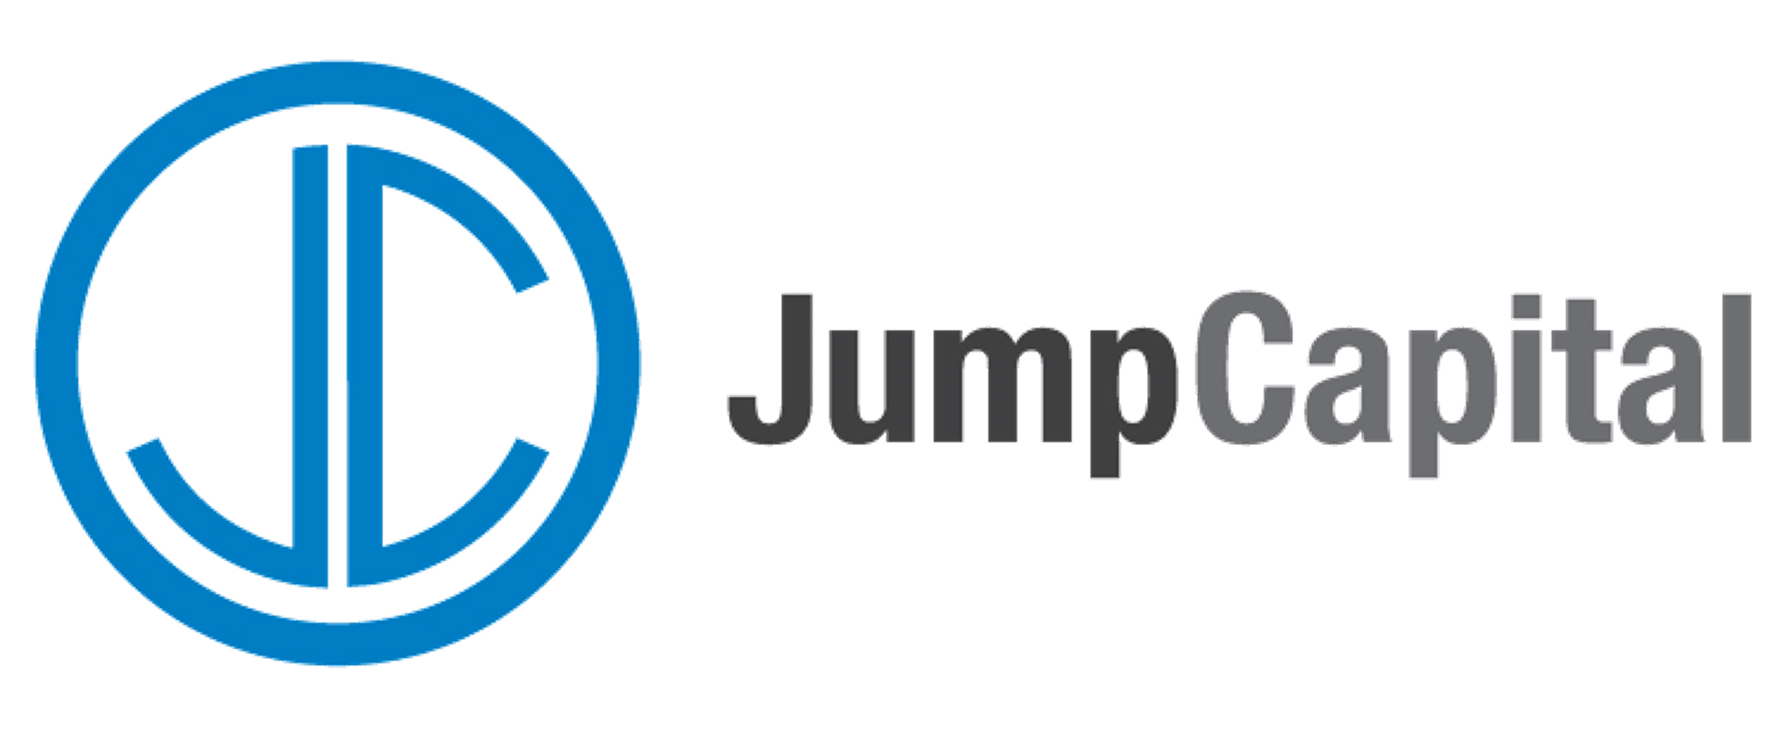 Jump Capital Logo